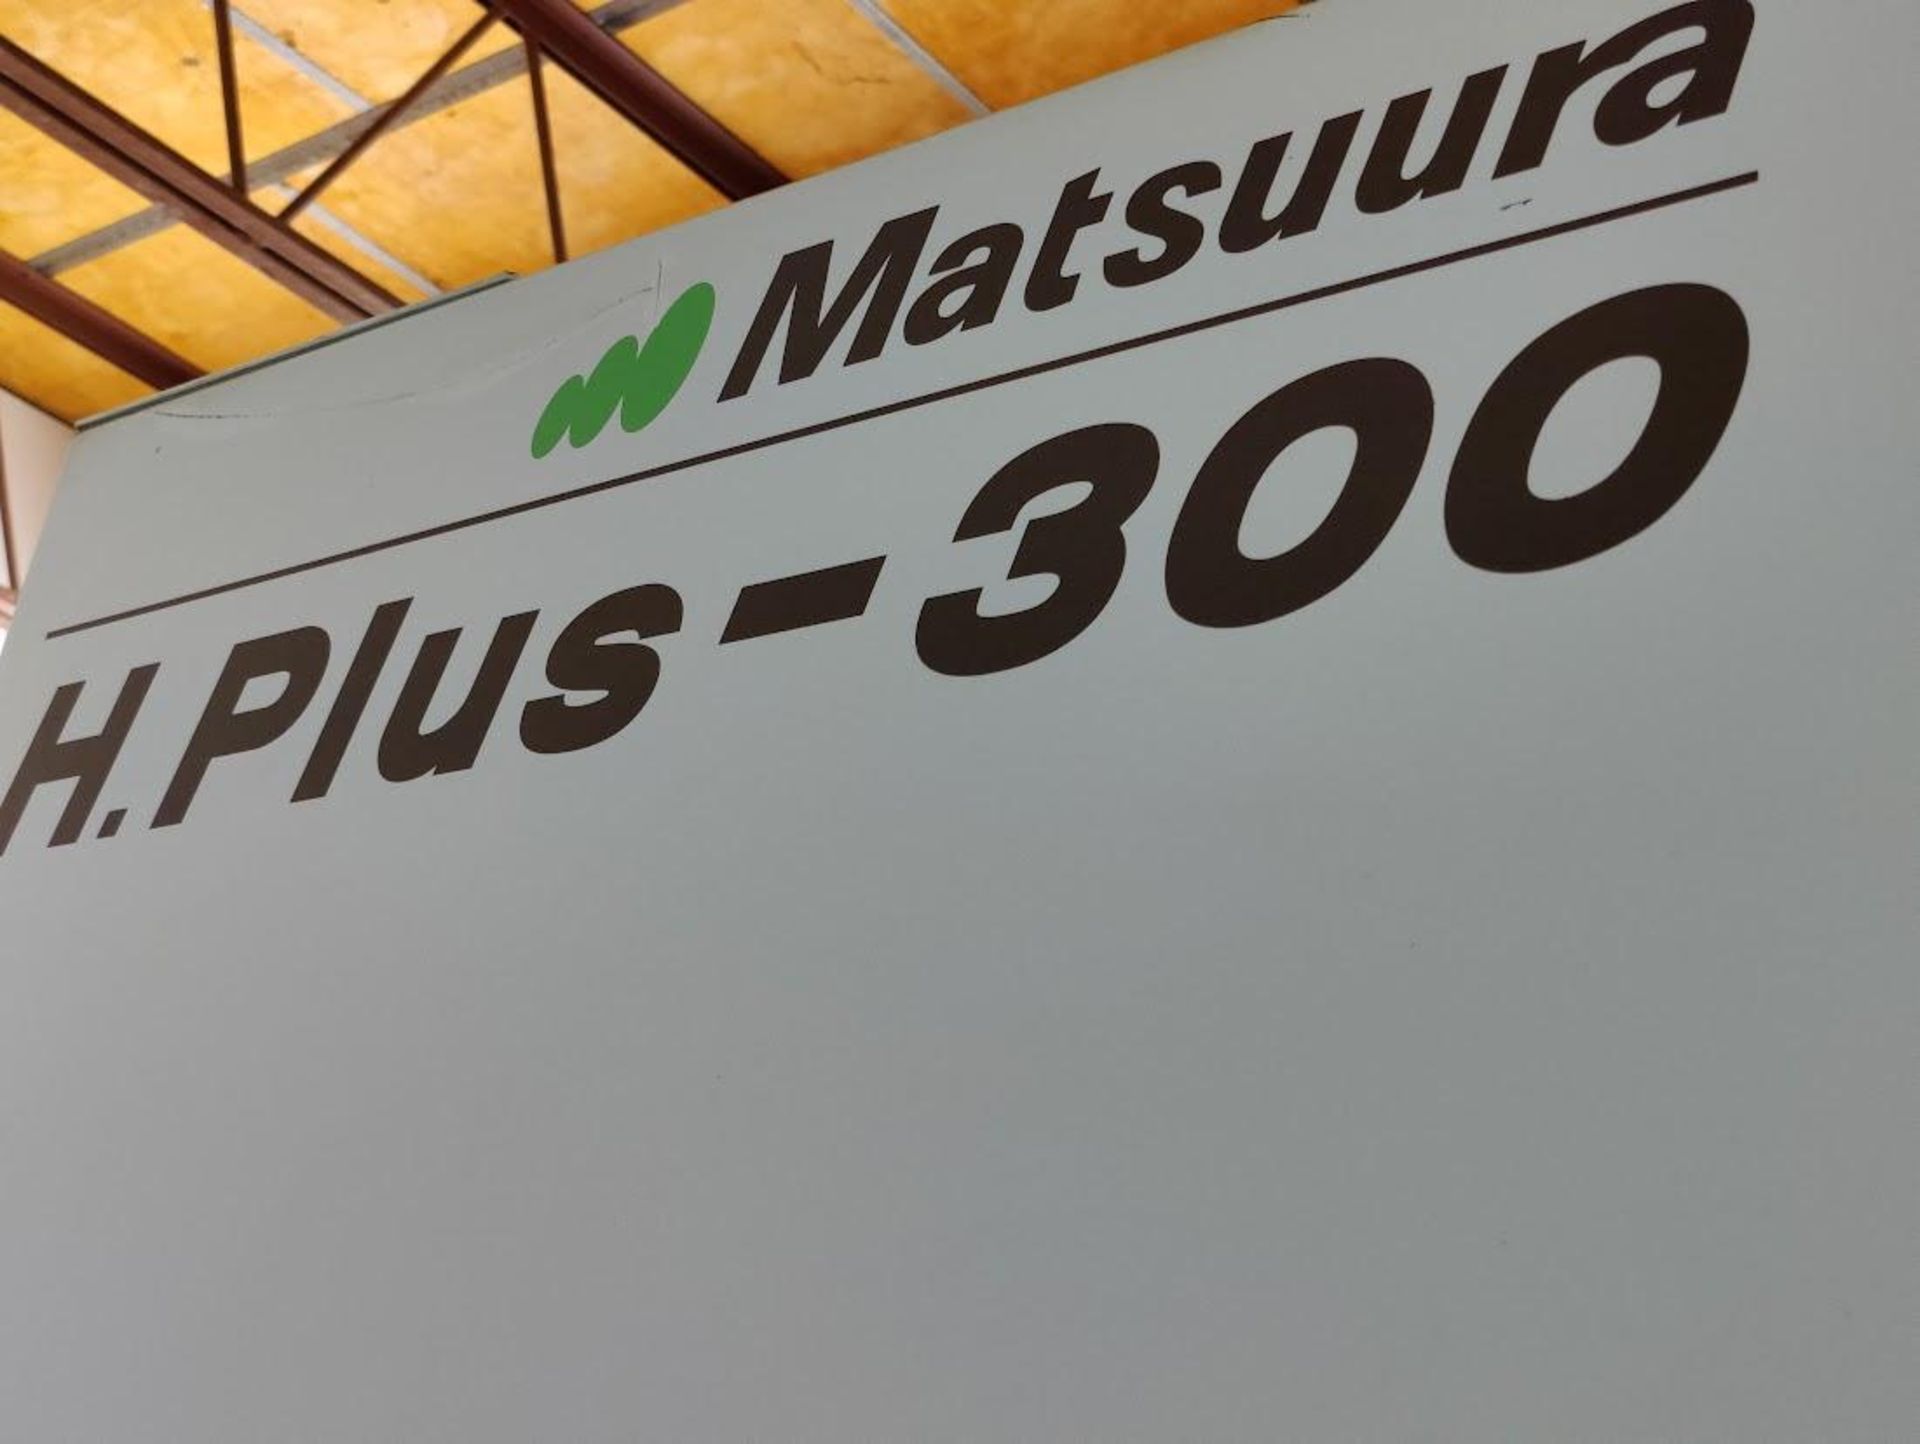 MATSUURA H-PLUS 300 PC-11 300MM HMC, 2007 - 11 STATION PALLET POOL, 180 ATC, NEW 20K SPINDLE - Image 12 of 12